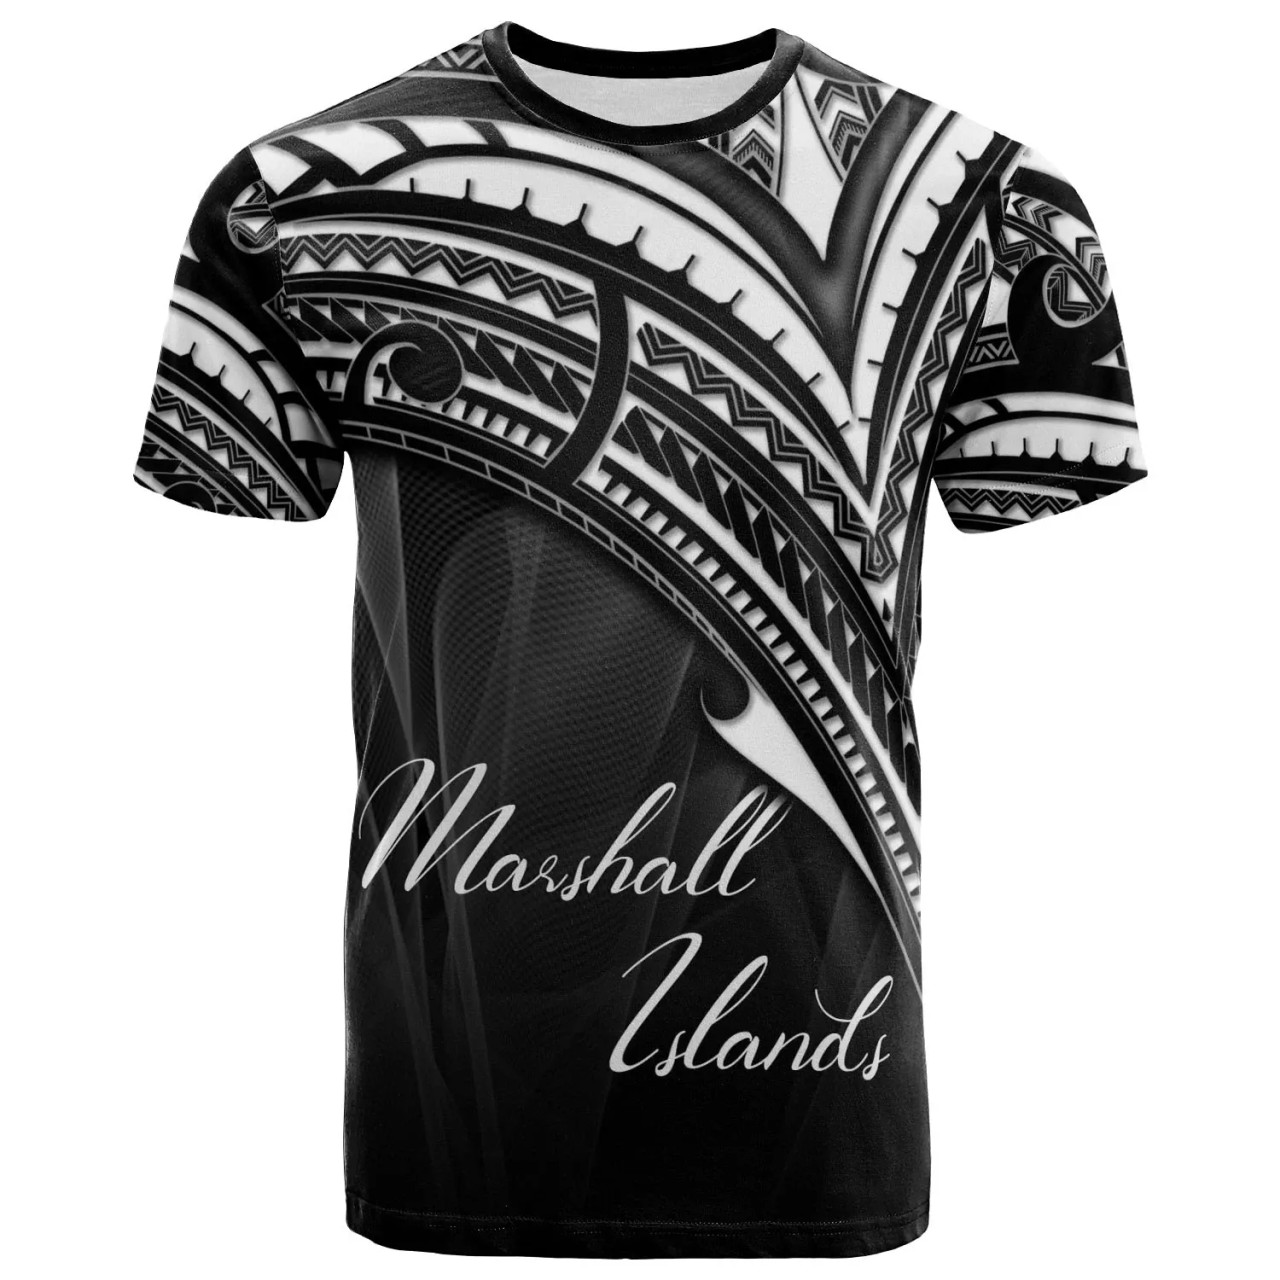 Marshall Islands T-Shirt - Cross Style 1